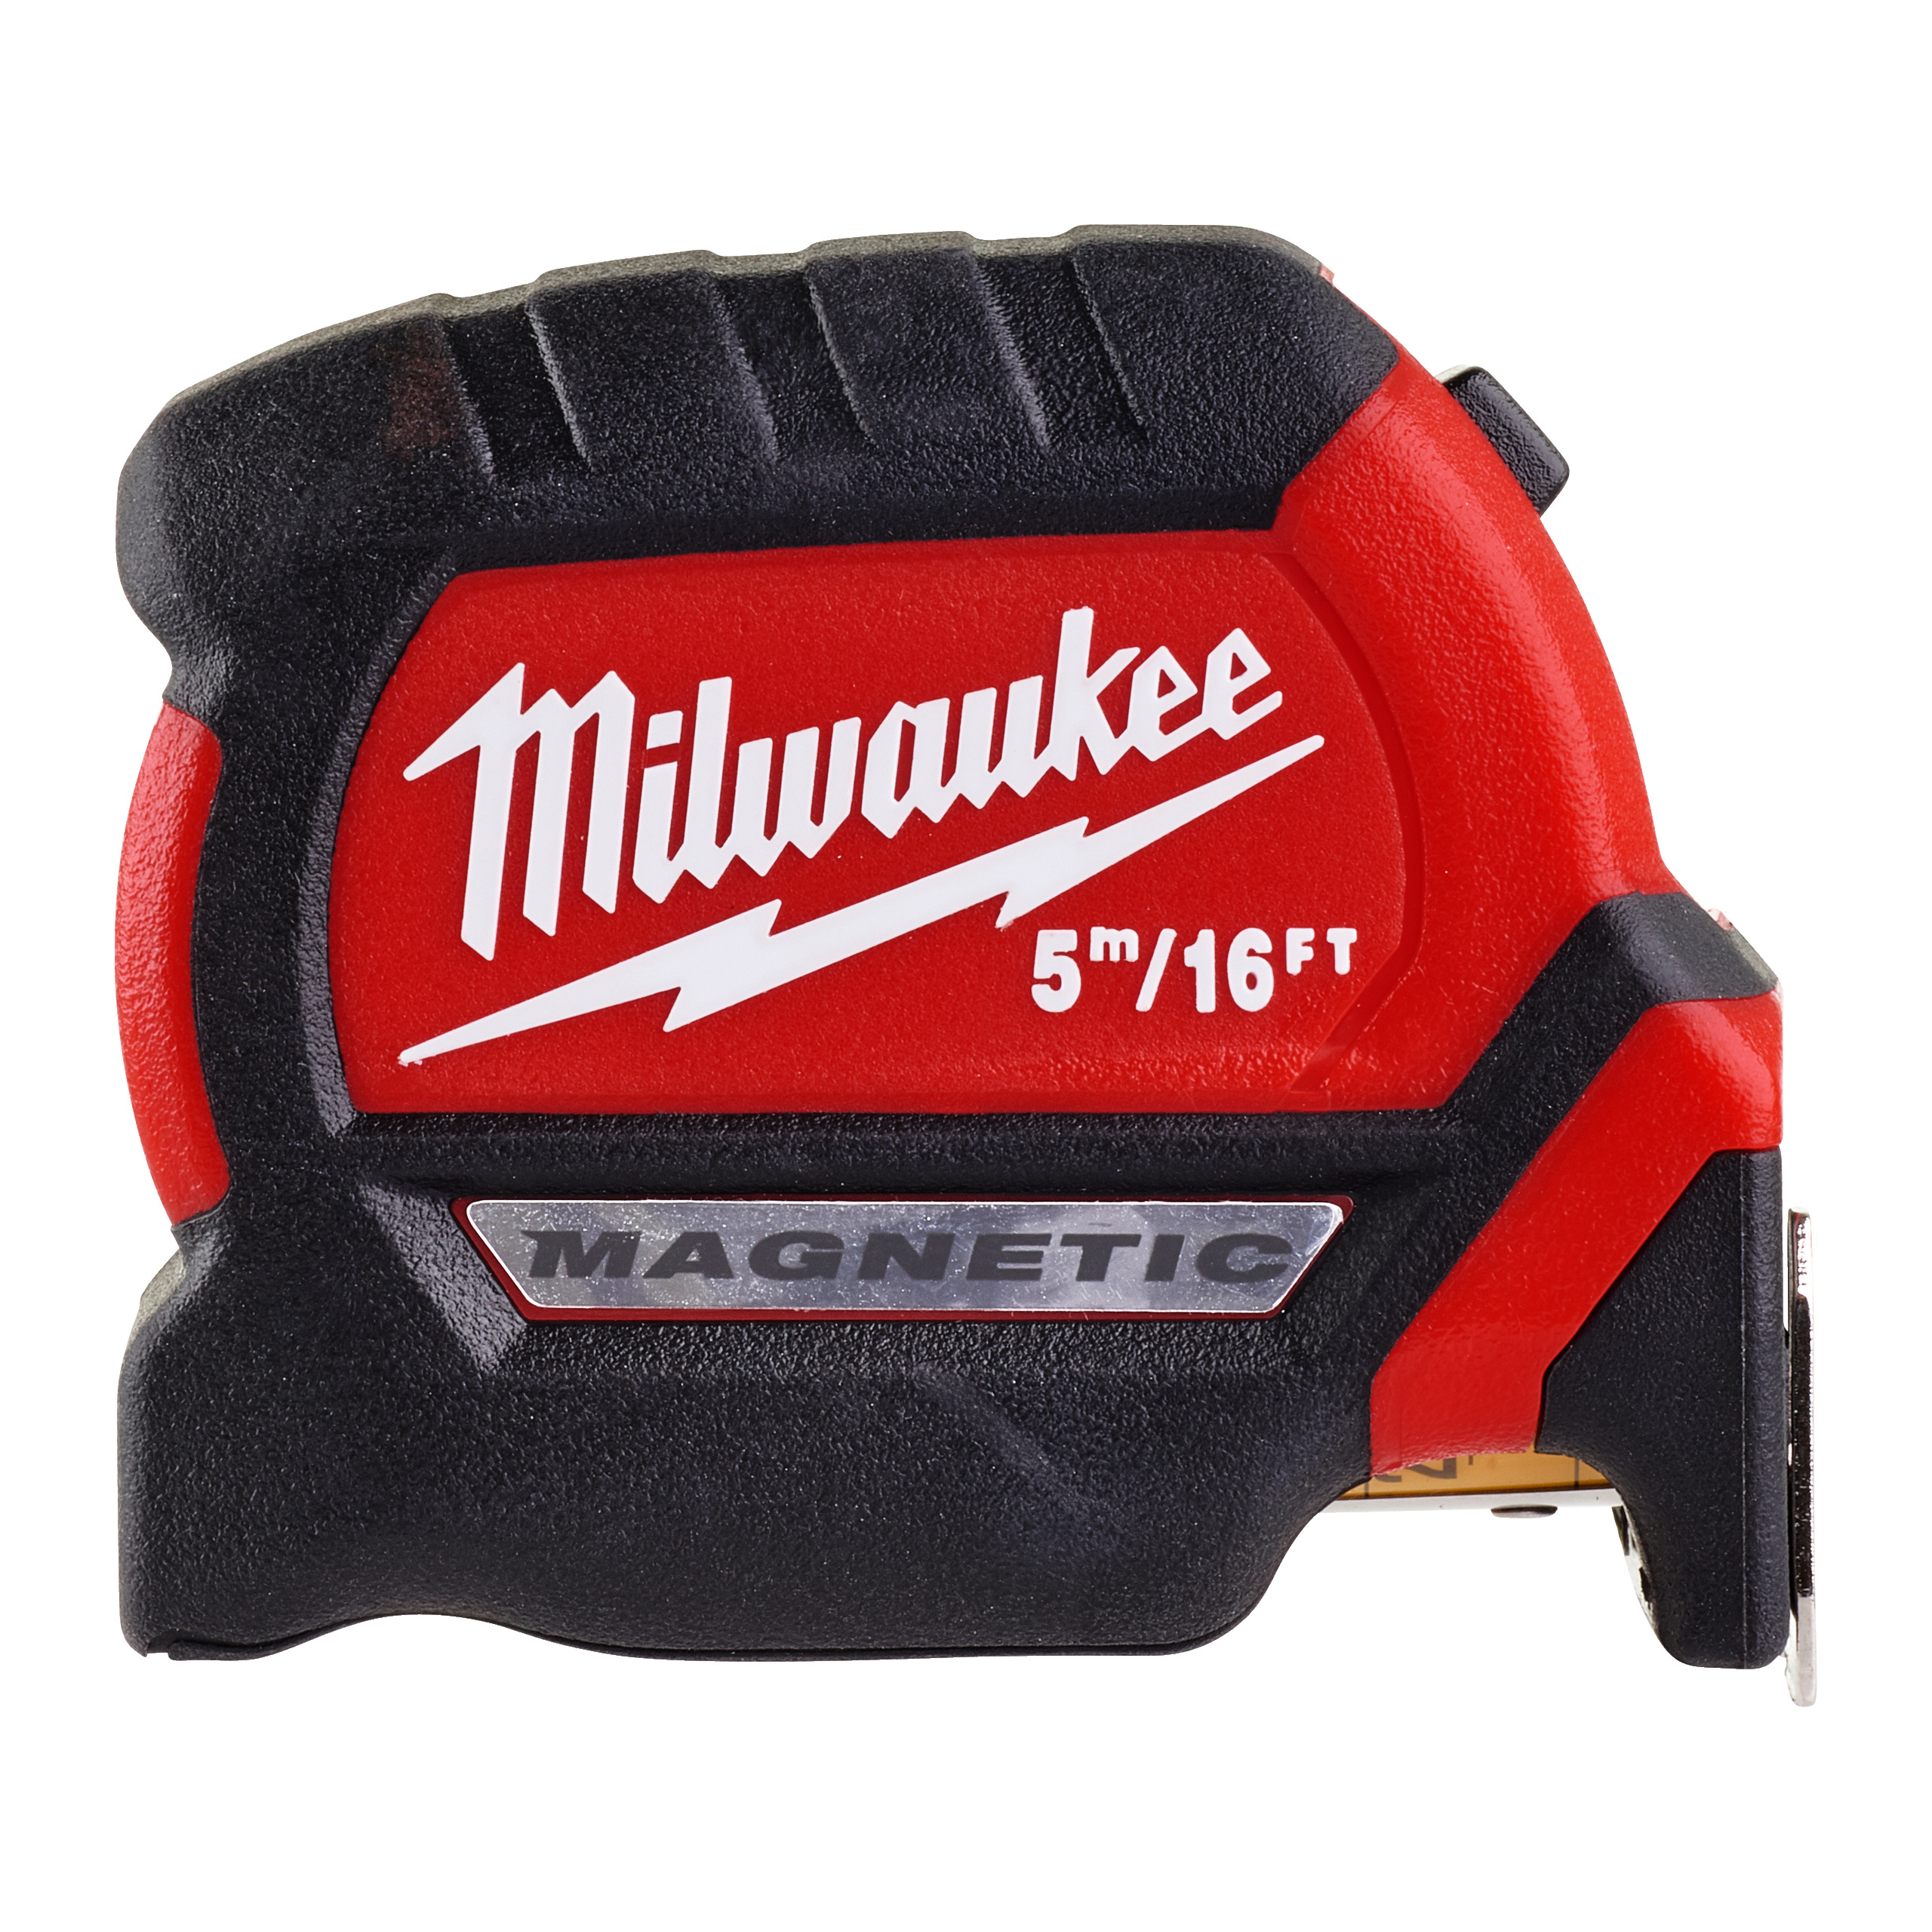 Milwaukee Magnetic Tape Measure 5 m - 16 ft / 27 - 1pc 4932464602